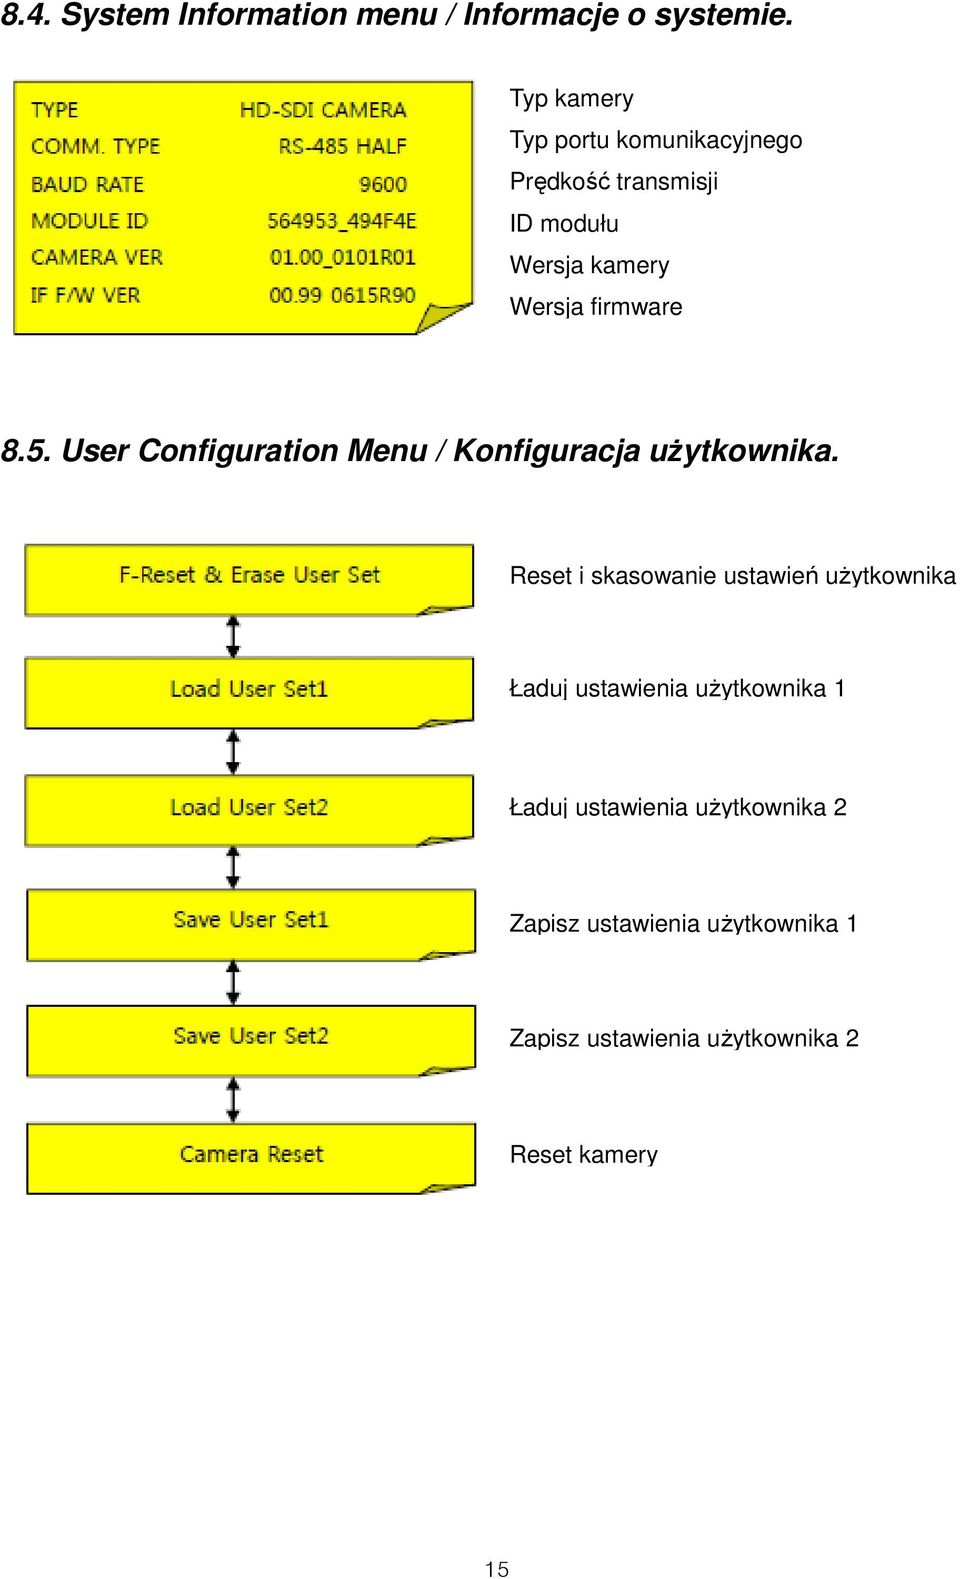 8.5. User Configuration Menu / Konfiguracja użytkownika.